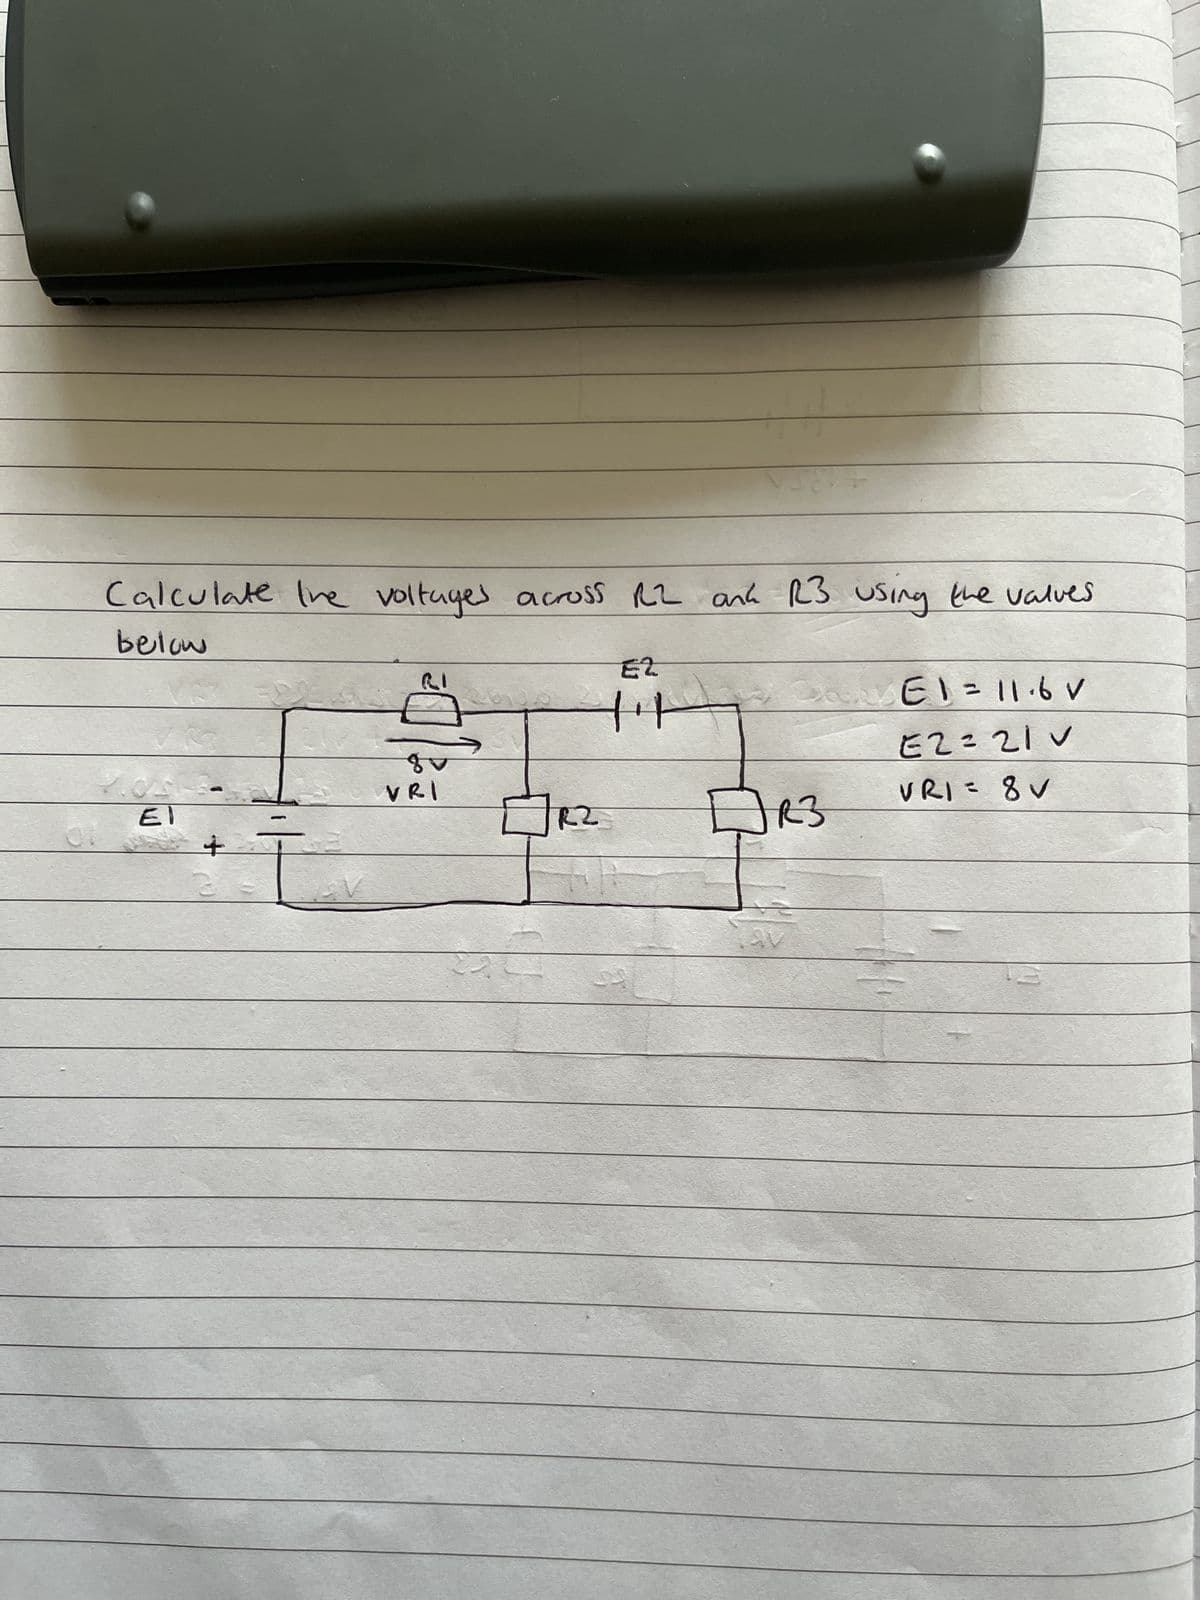 Calculate the voltages across R2 and R3 using the values
below
Poste
EI
VRI
جاب
122
E2
Veer
24
DR3
E1 = 11.6 V
E2= 21 V
VRI= 8V